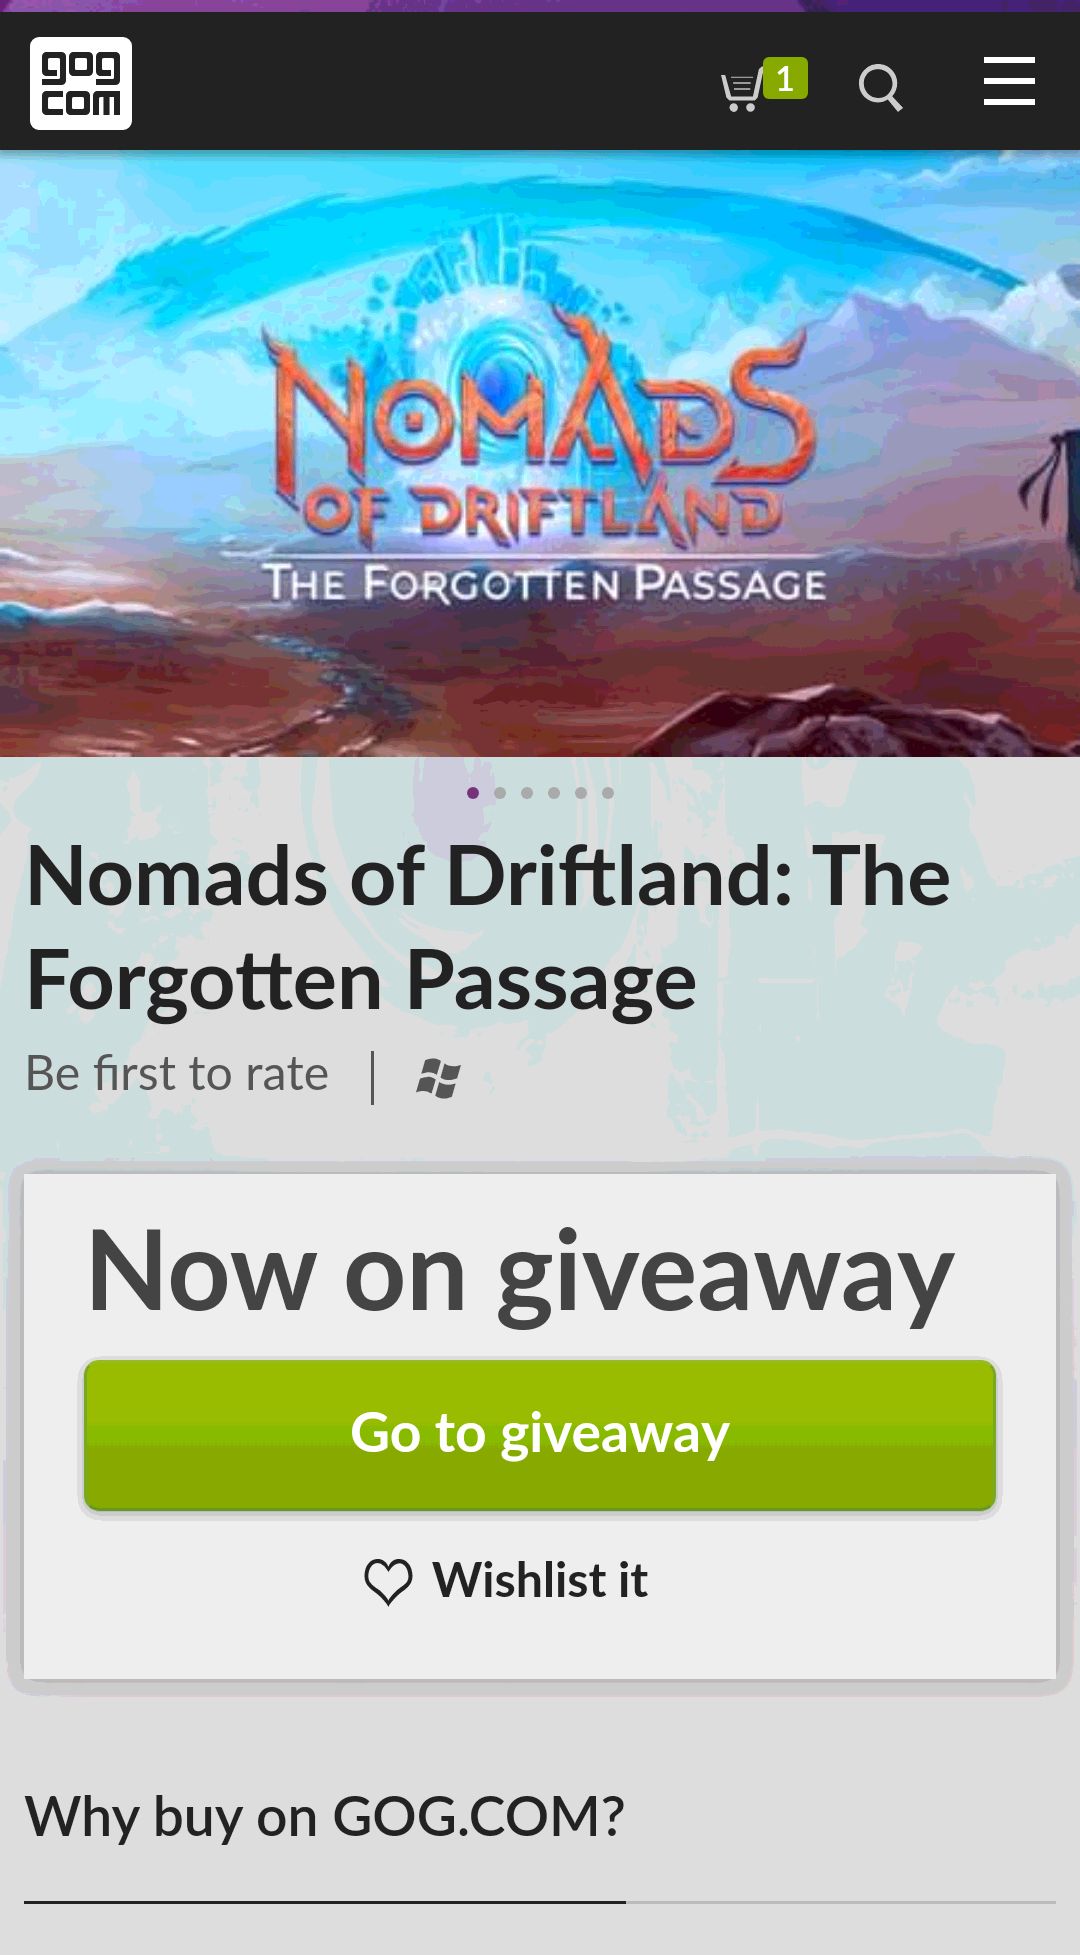 Nomads of Driftland: The Forgotten Passage on GOG.com喜加一